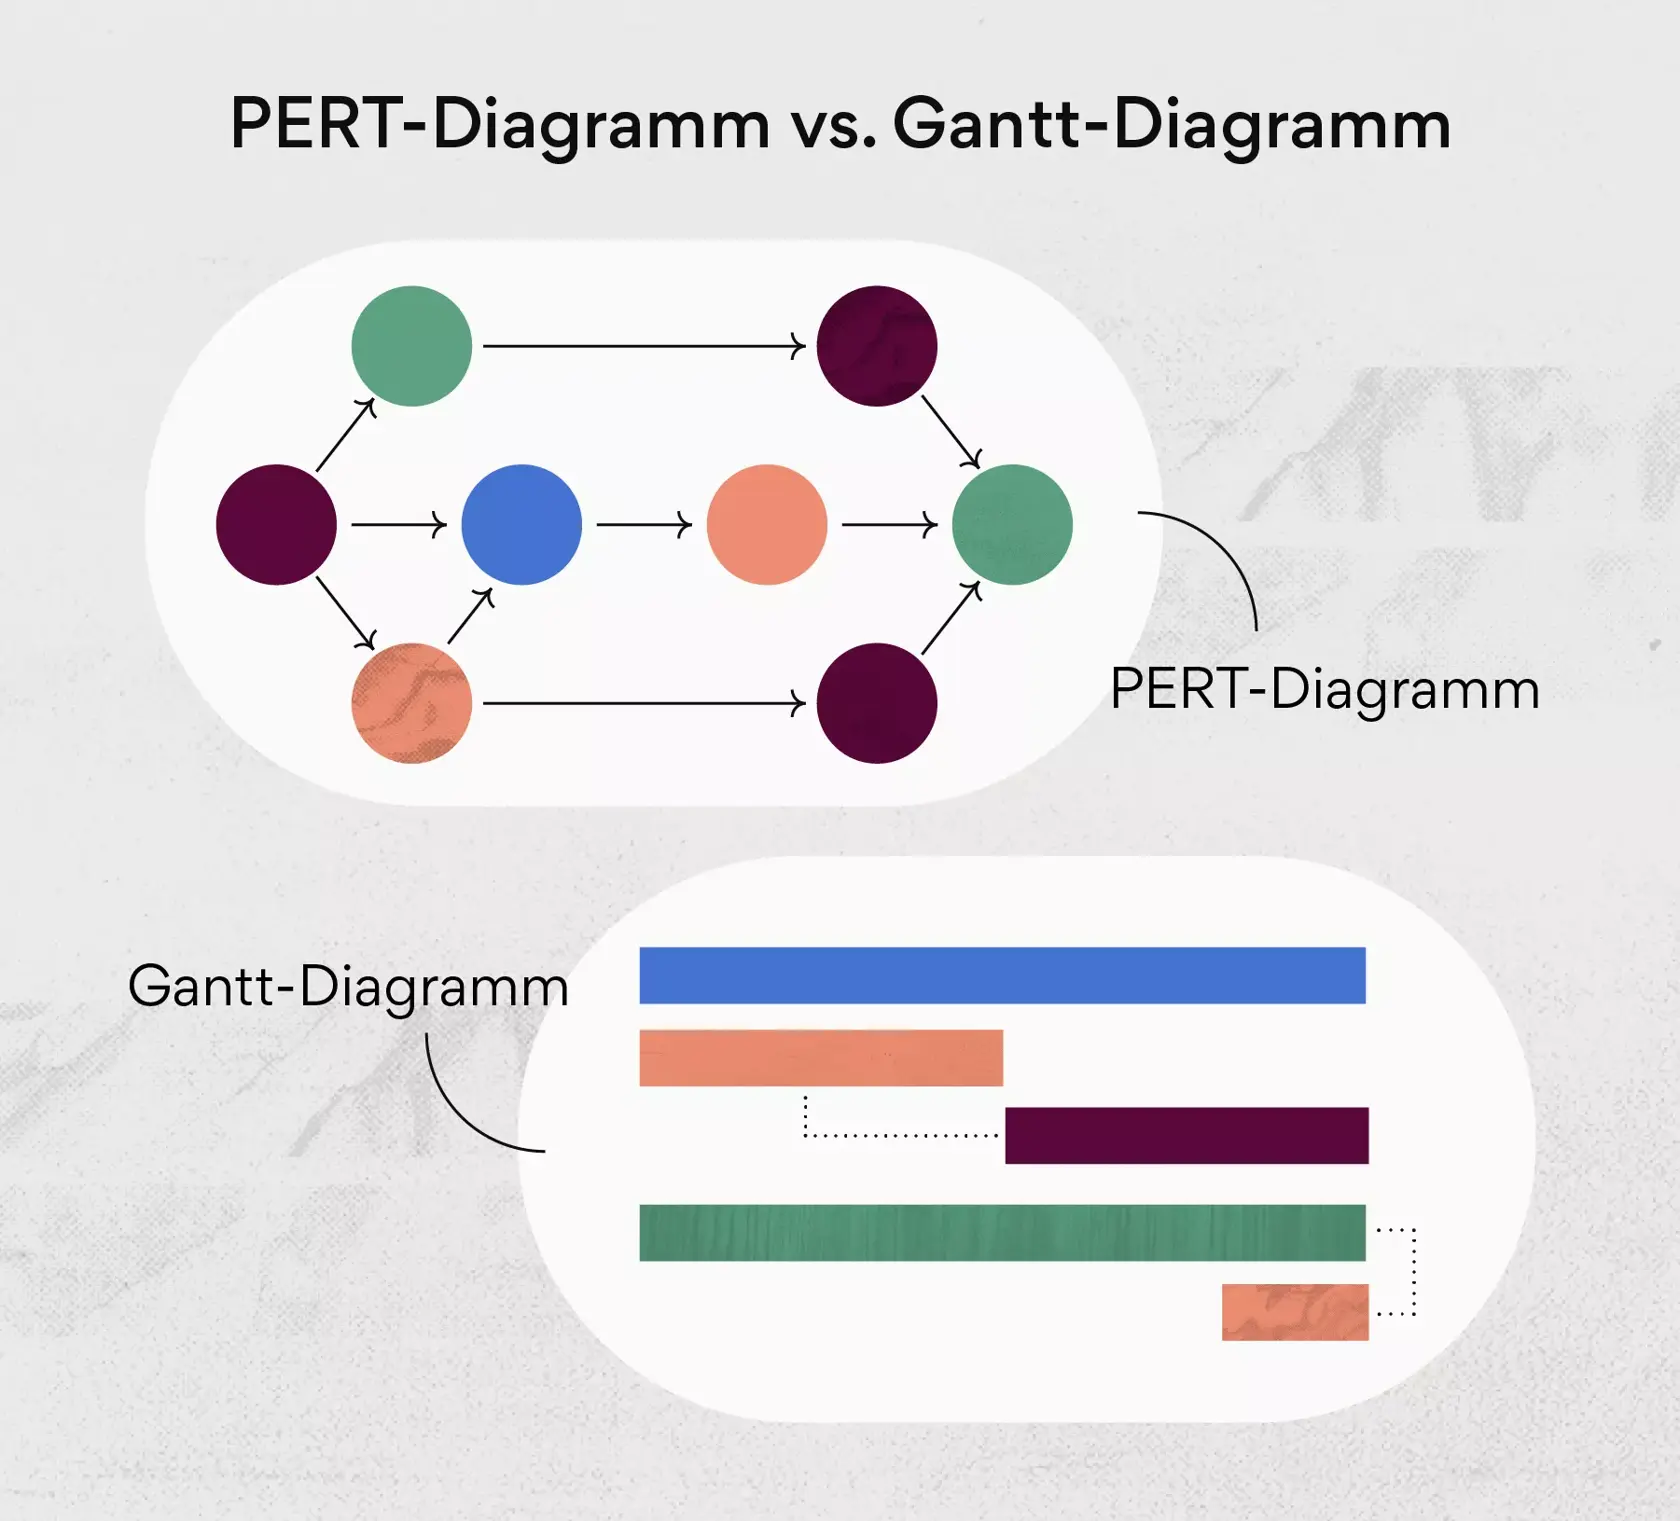 PERT-Diagramm vs. Gantt-Diagramm